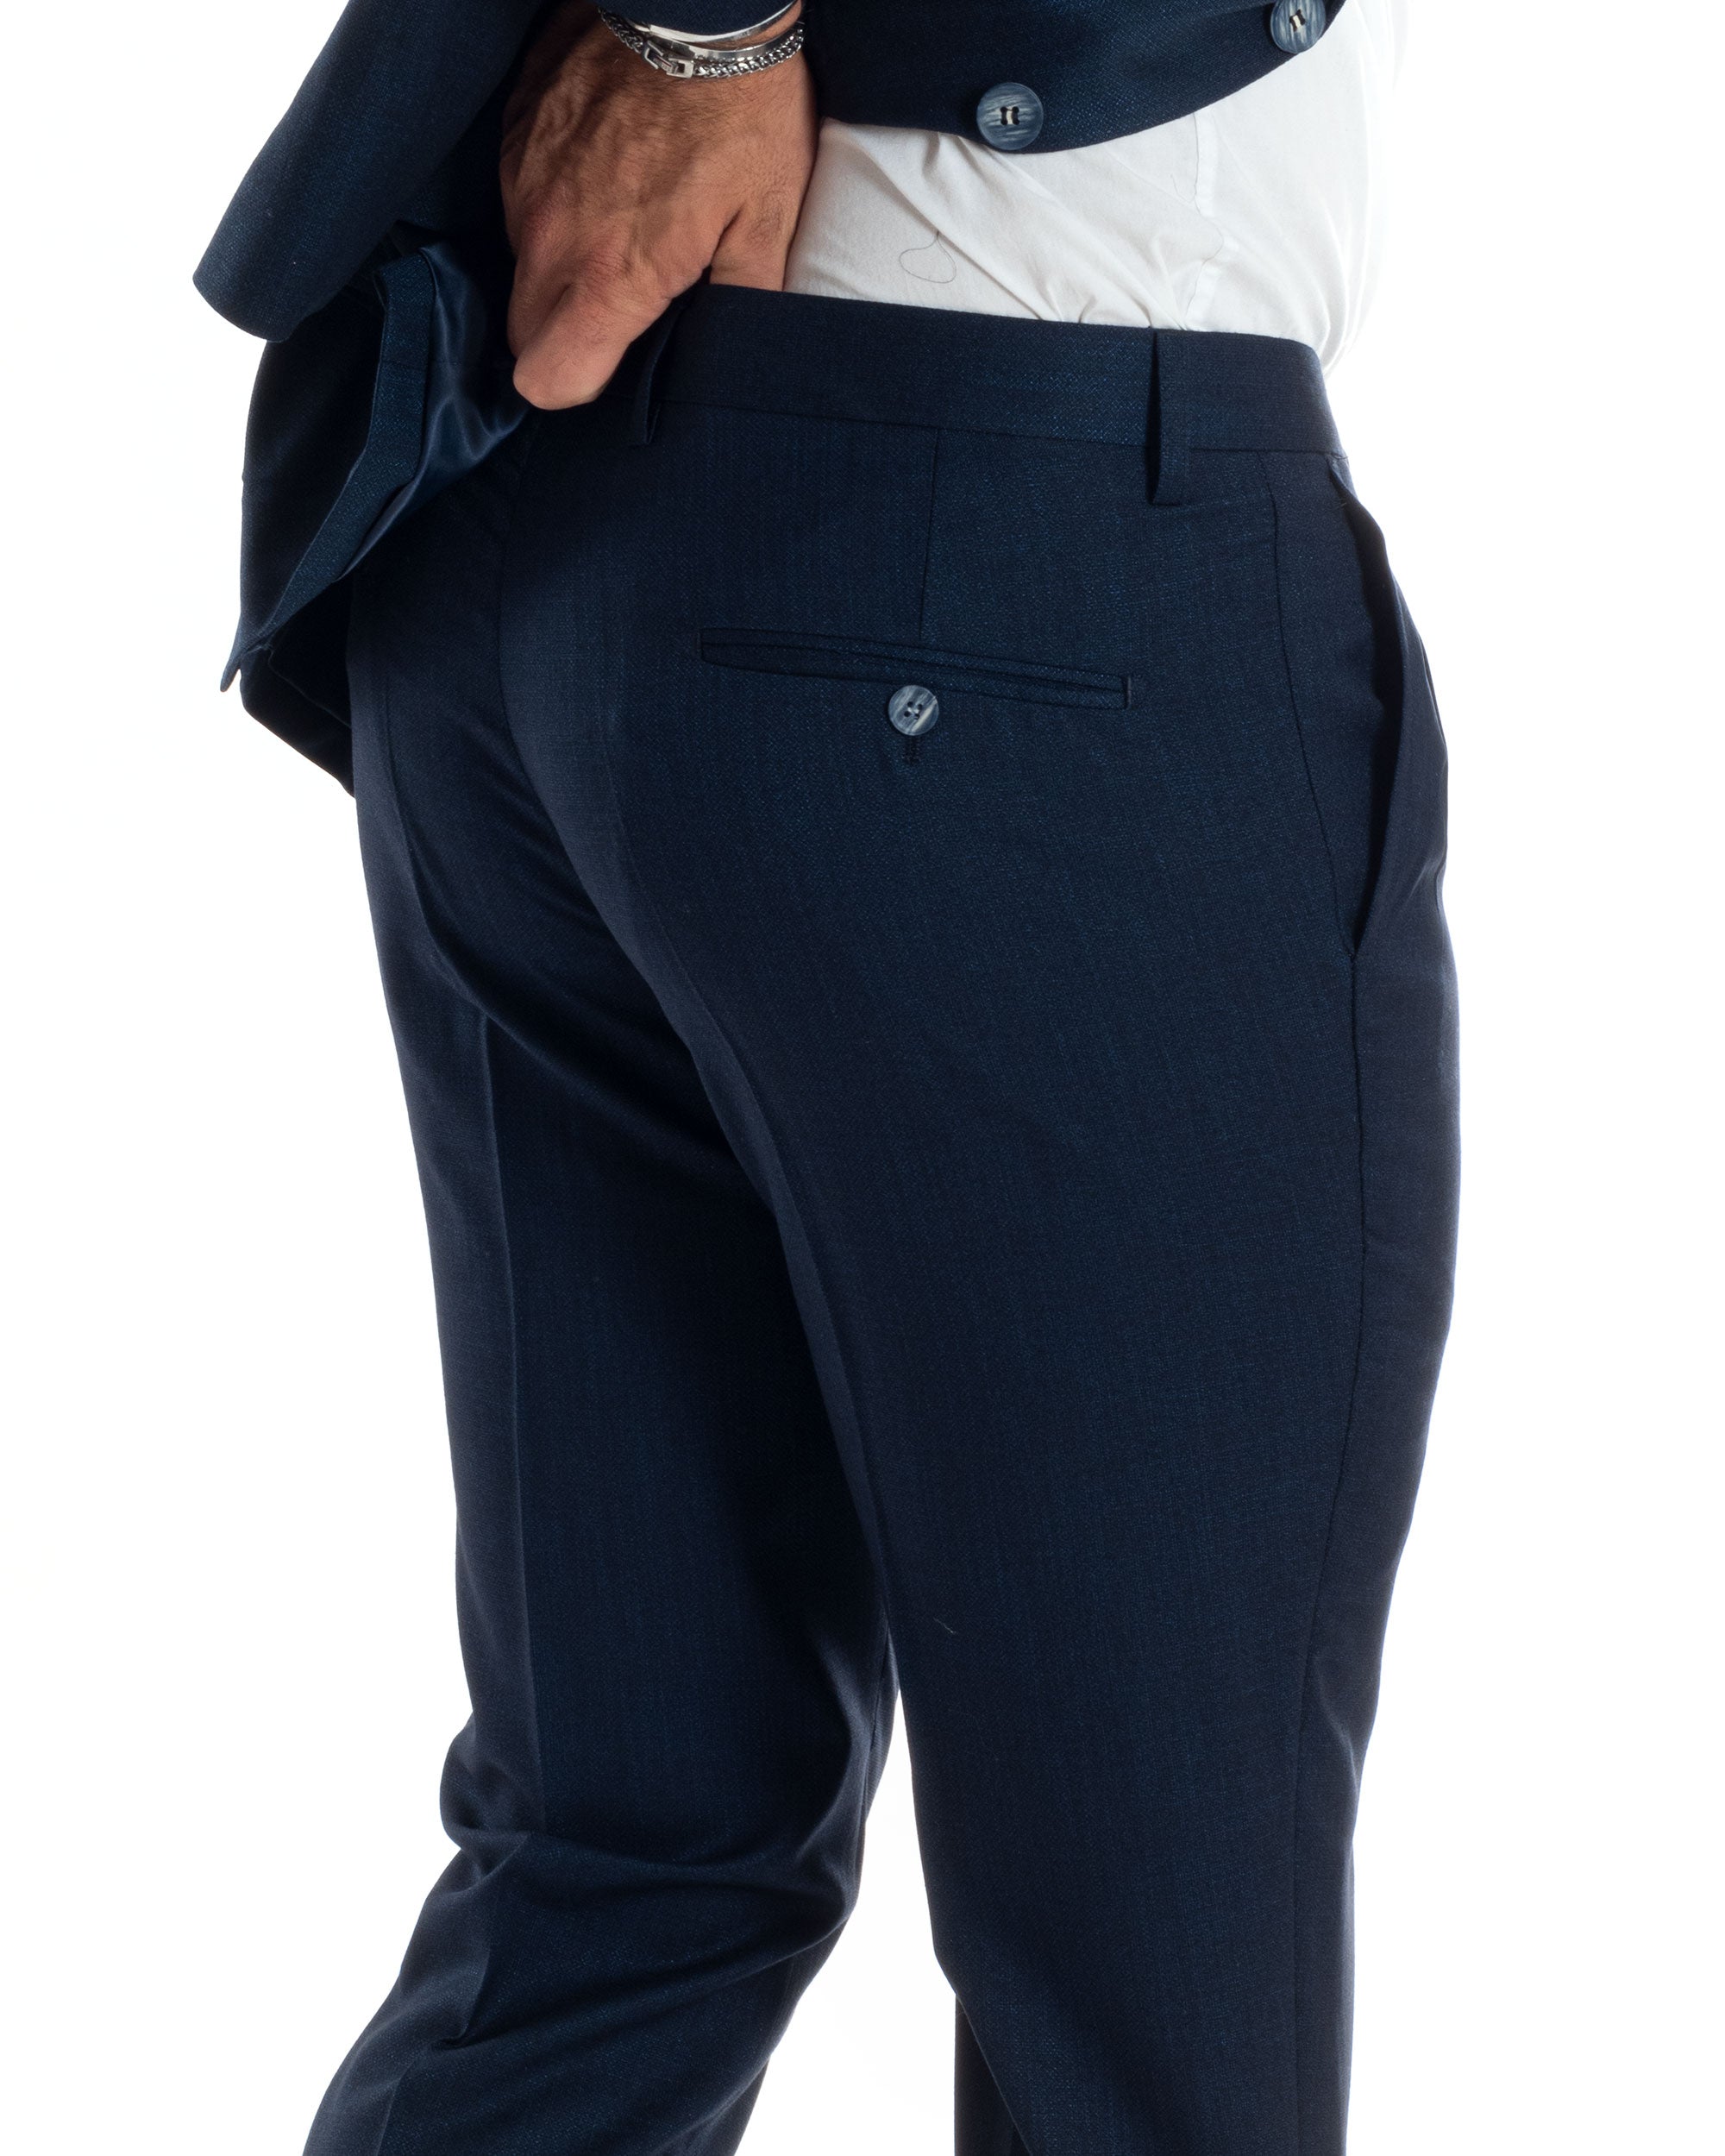 Abito Uomo Completo Sartoriale Monopetto Giacca Pantaloni Casual Elegante Tinta Unita Melangiato Blu GIOSAL-AE1071A